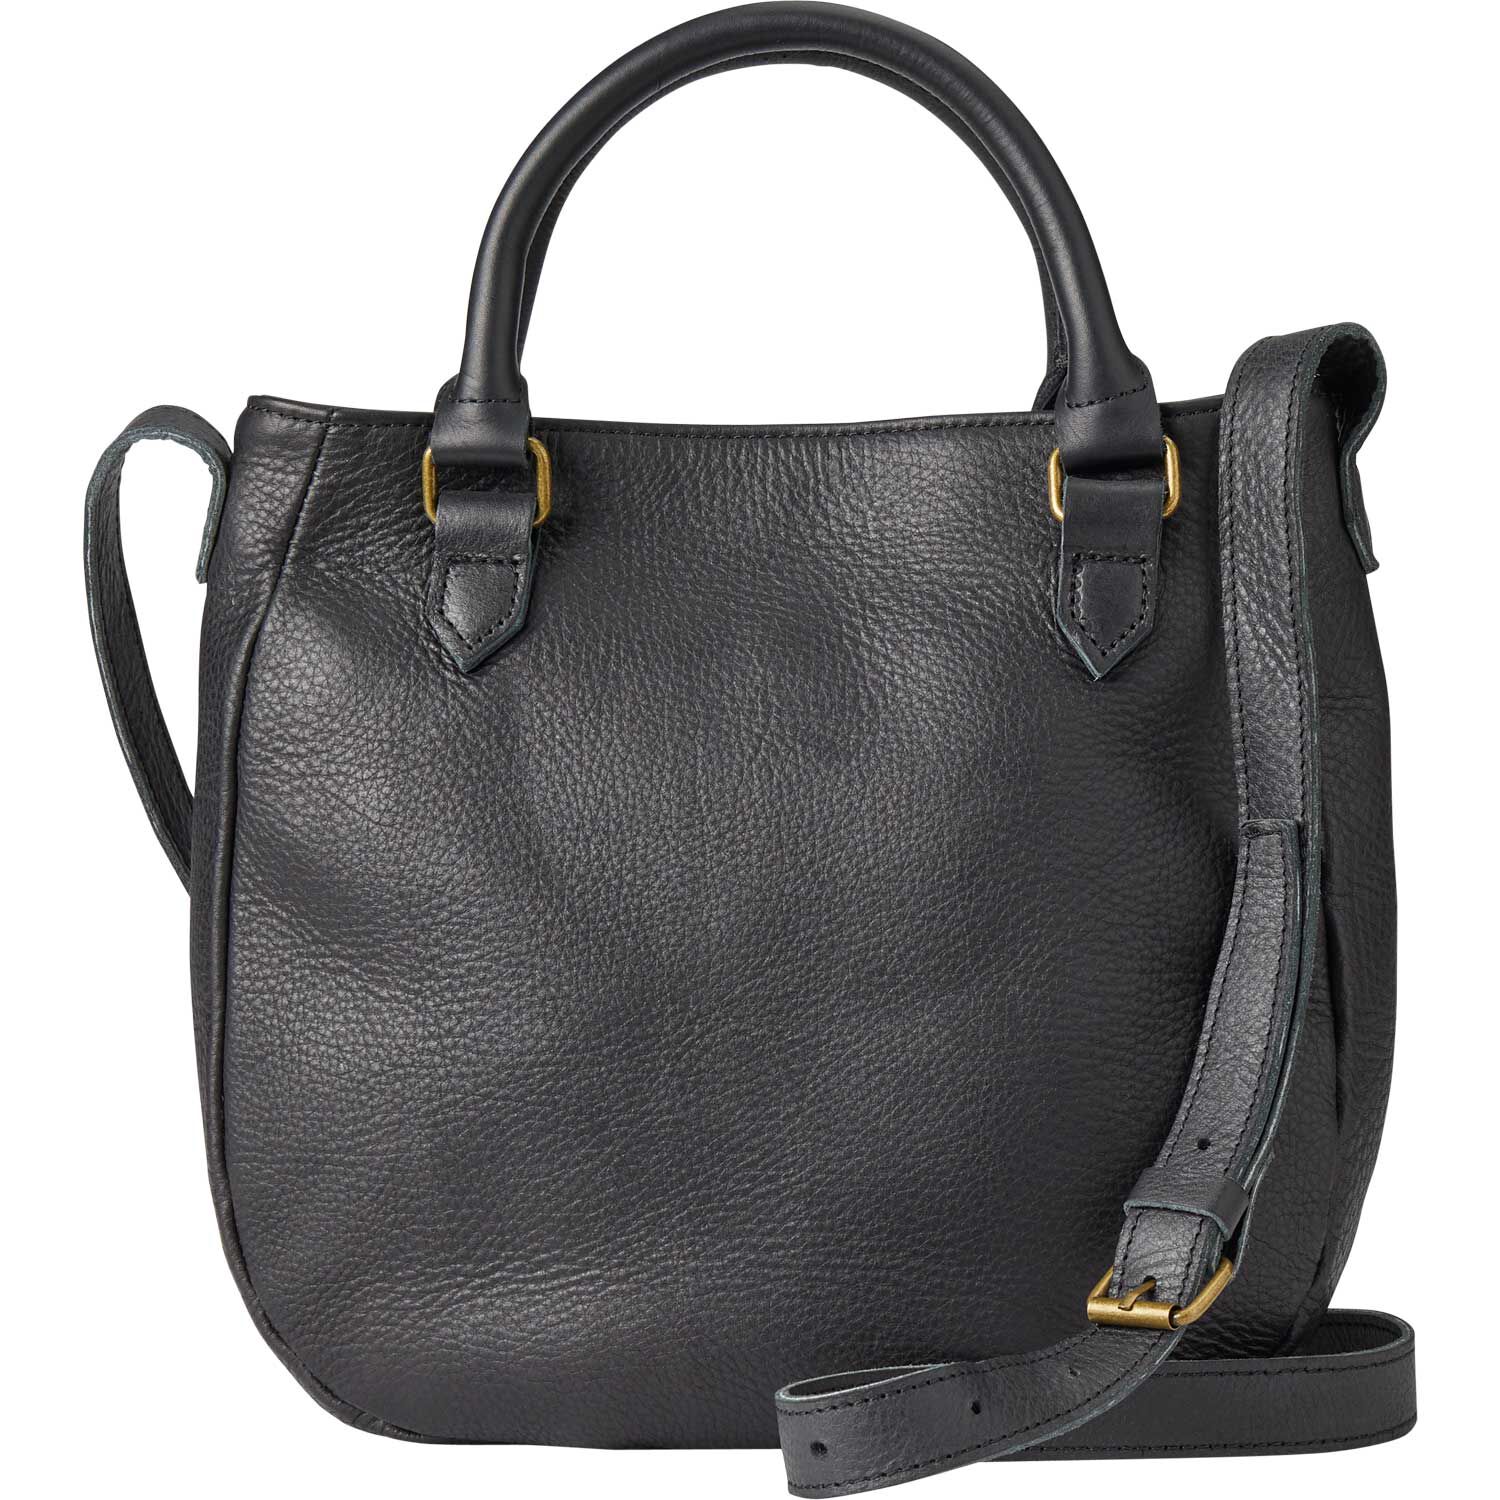 Vintage Leather Saddle Purse Handbag | eBay